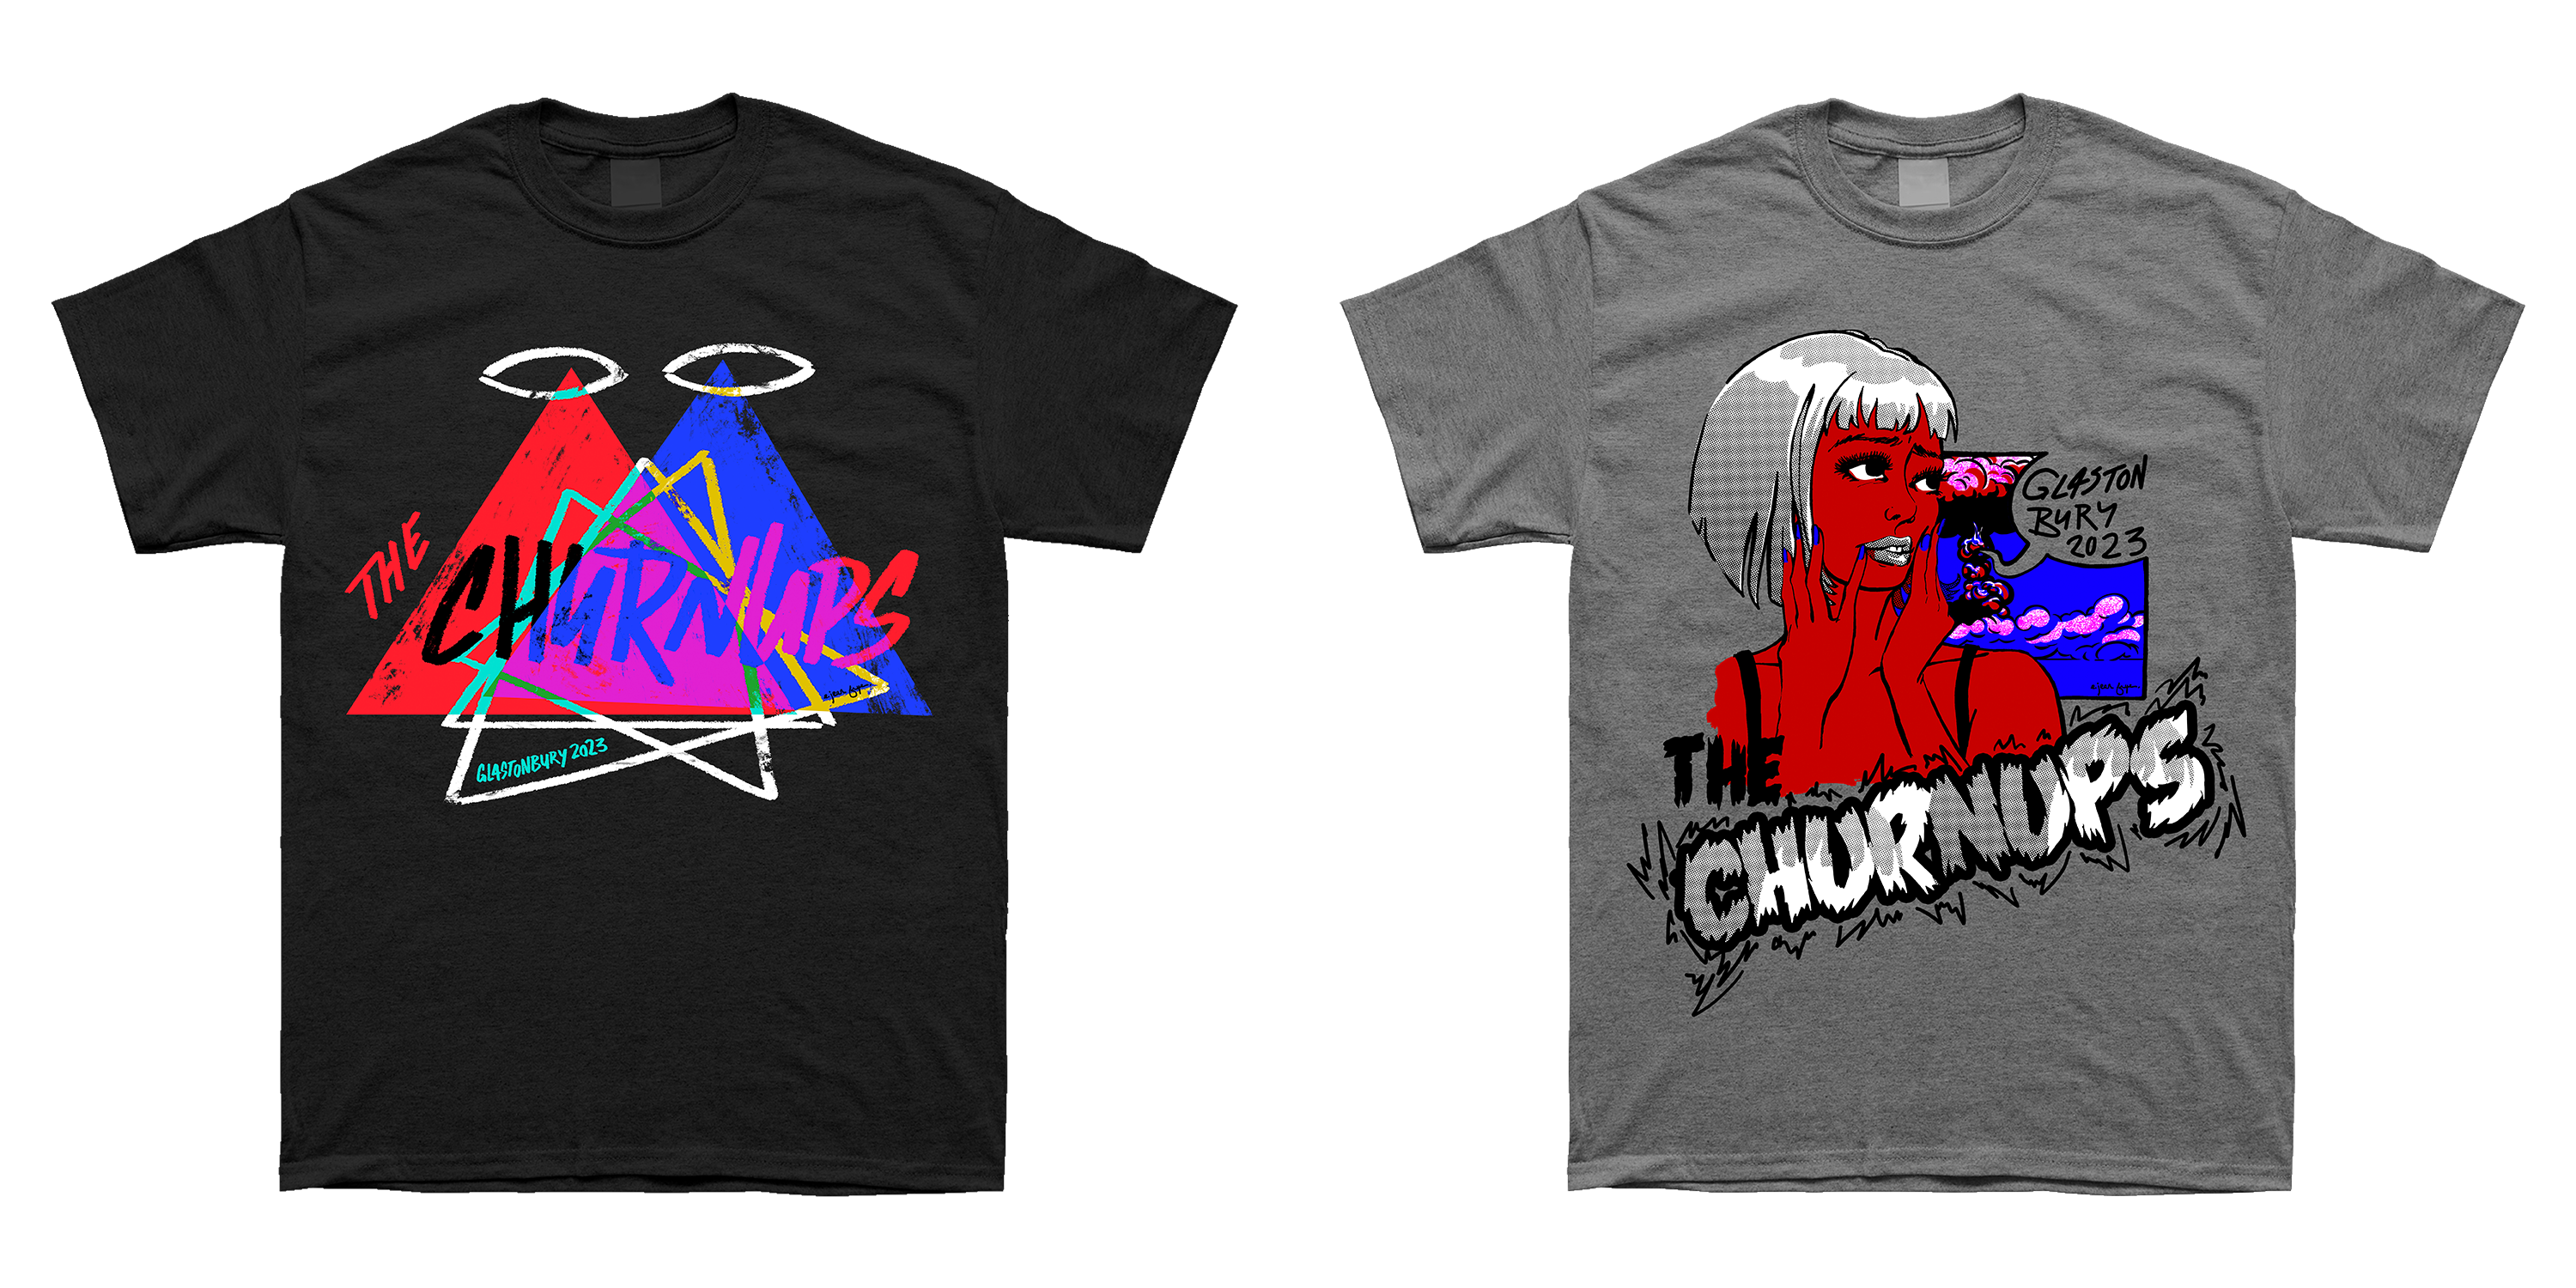 The Churnups t-shirts